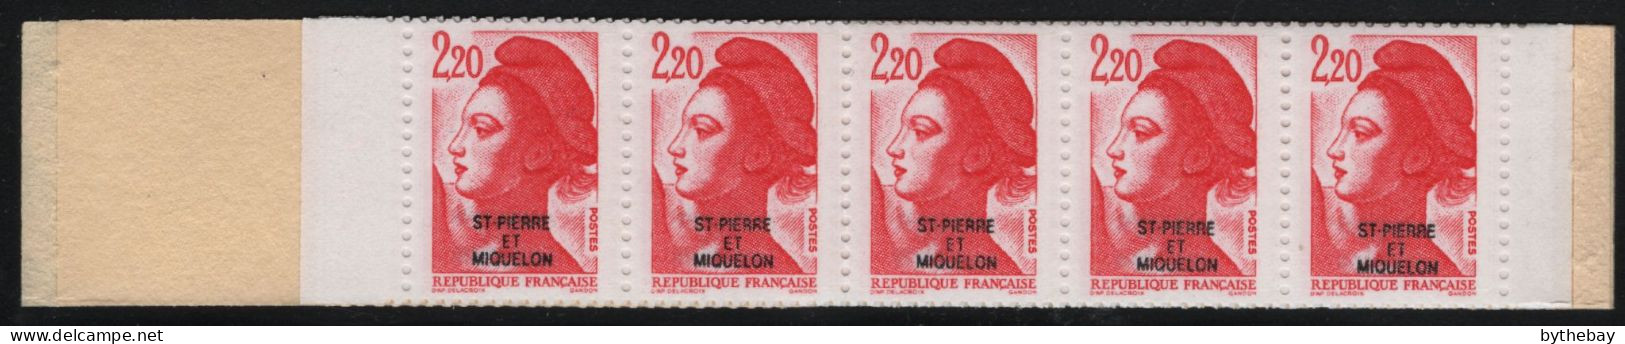 St Pierre Et Miquelon 1986 MNH Sc 462 2.20fr Marianne O/P Booklet (1) - Cuadernillos